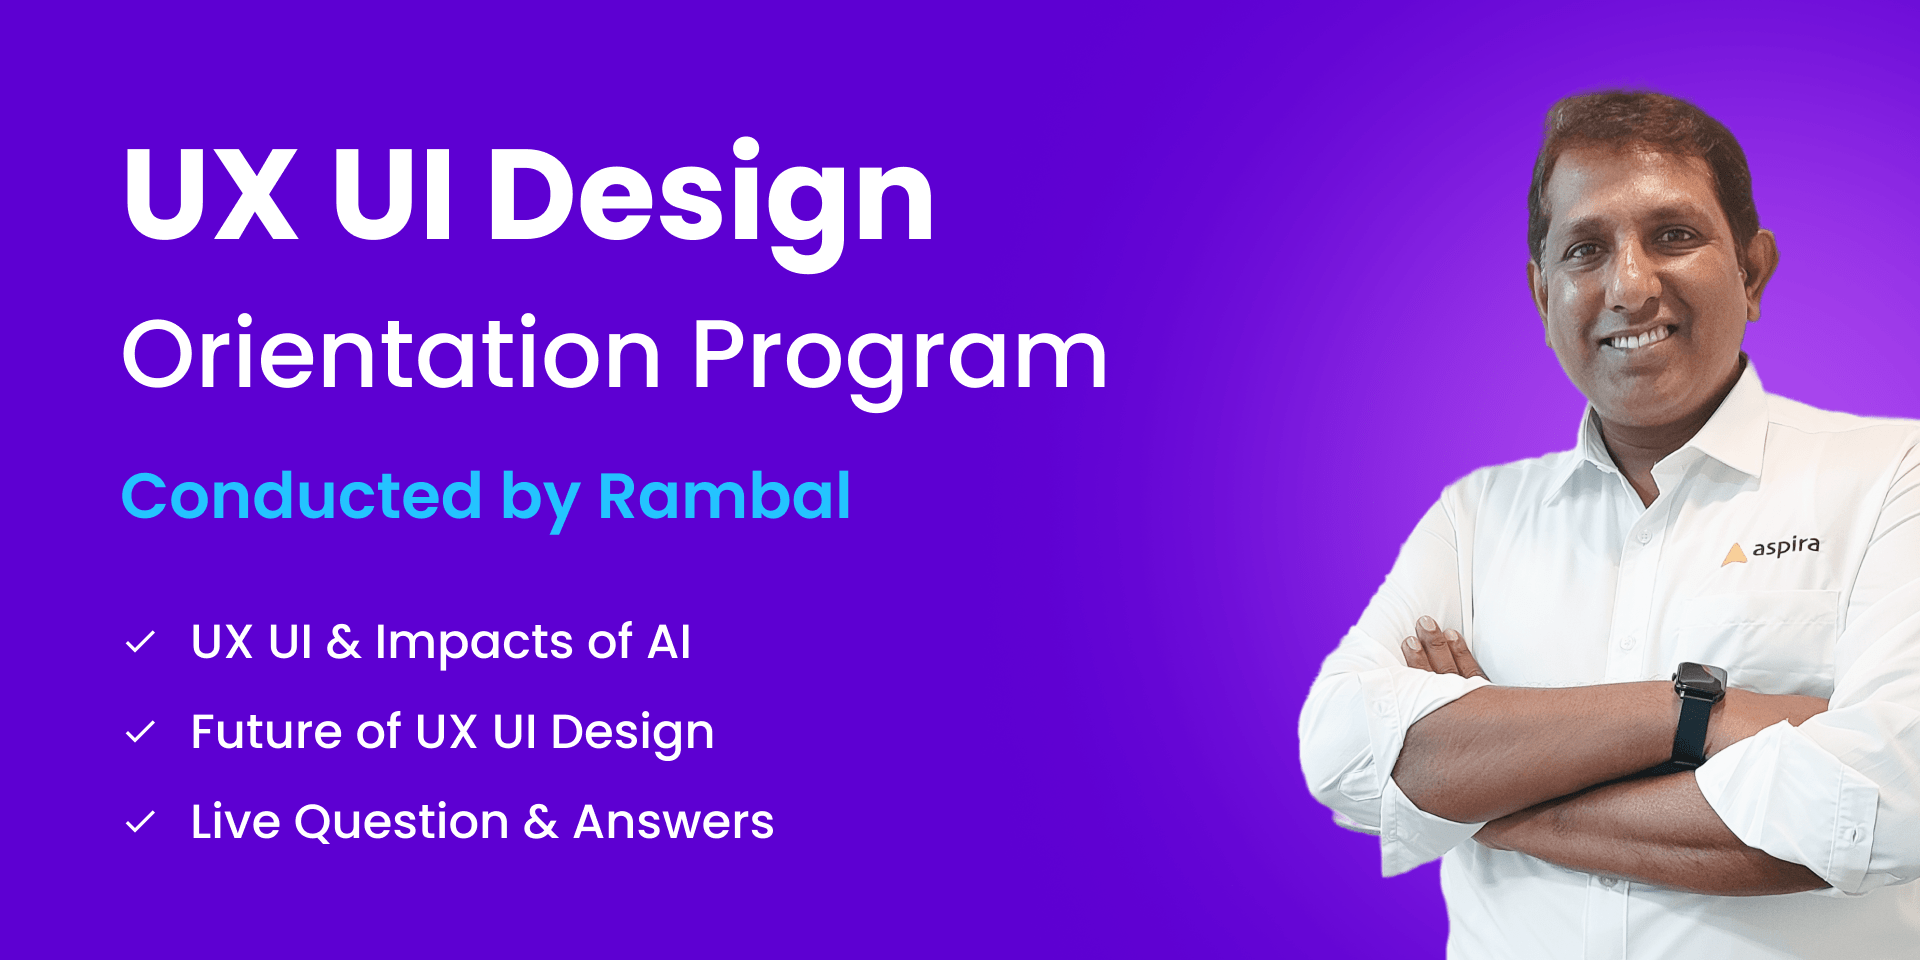 UX UI Design Orientation Program by Rambal